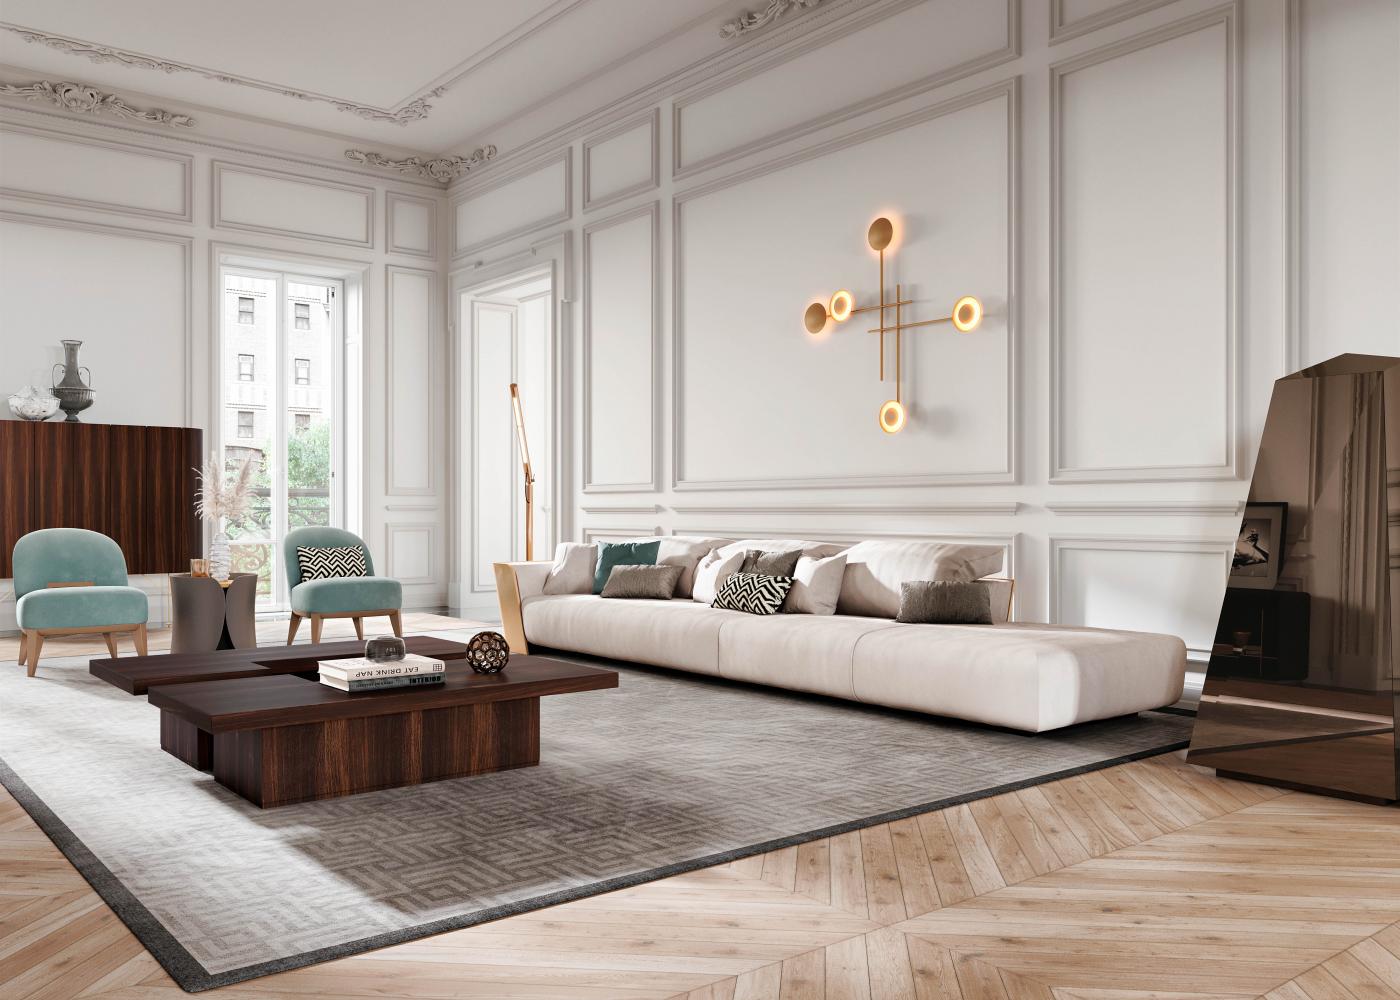 stories | luxury furniture for a modern interior design | laurameroni